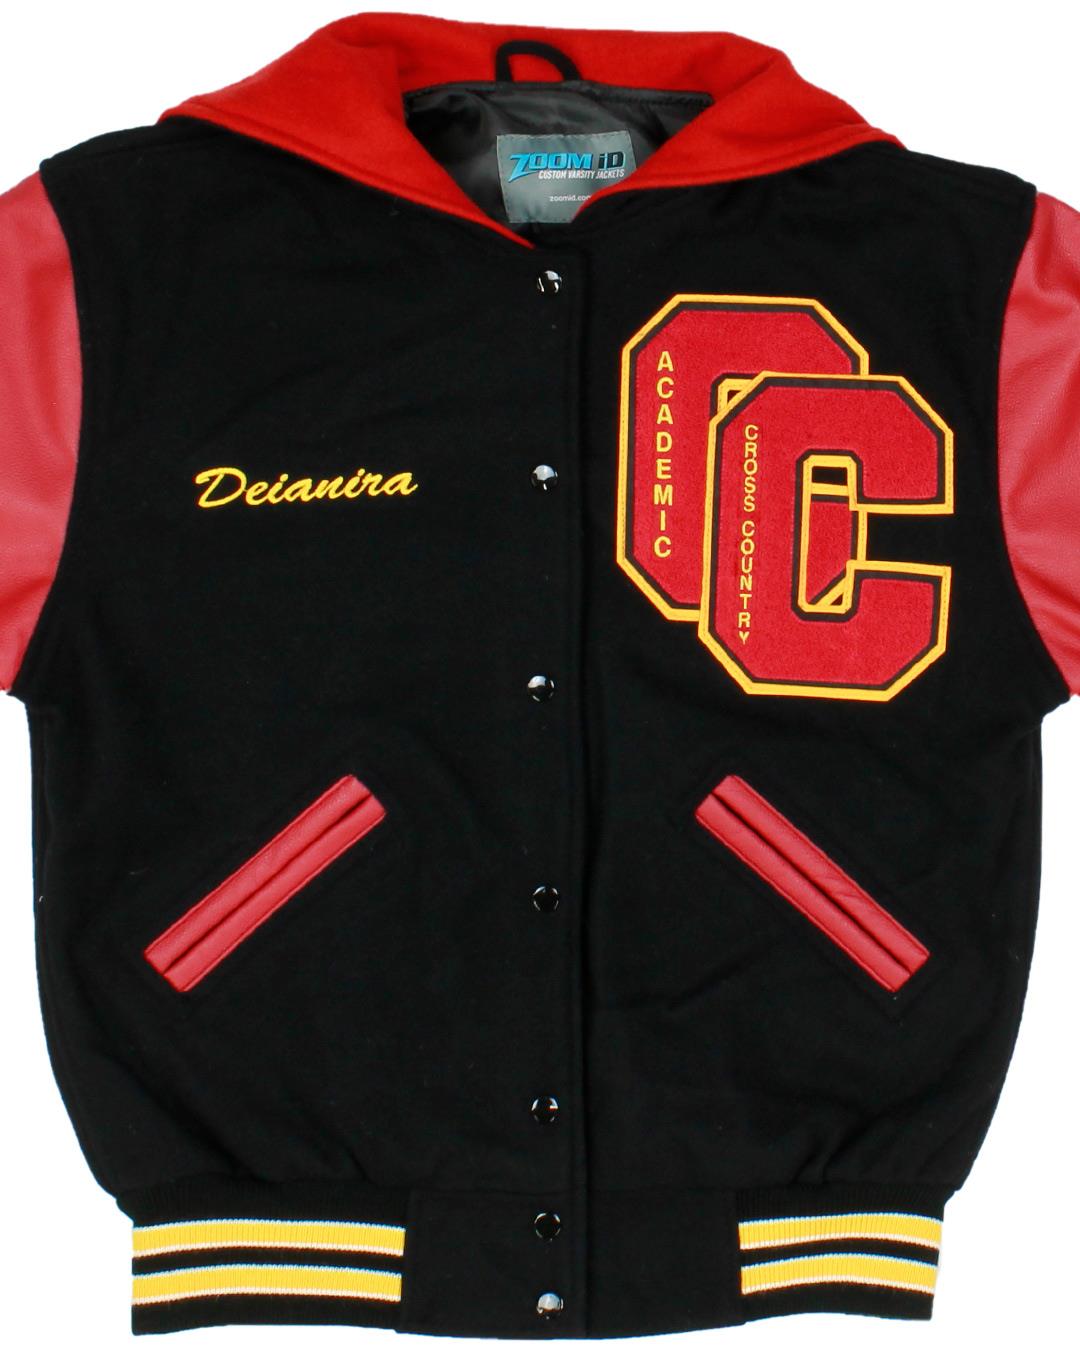 Centennial High School Letter Jacket - Las Cruces NM - Front